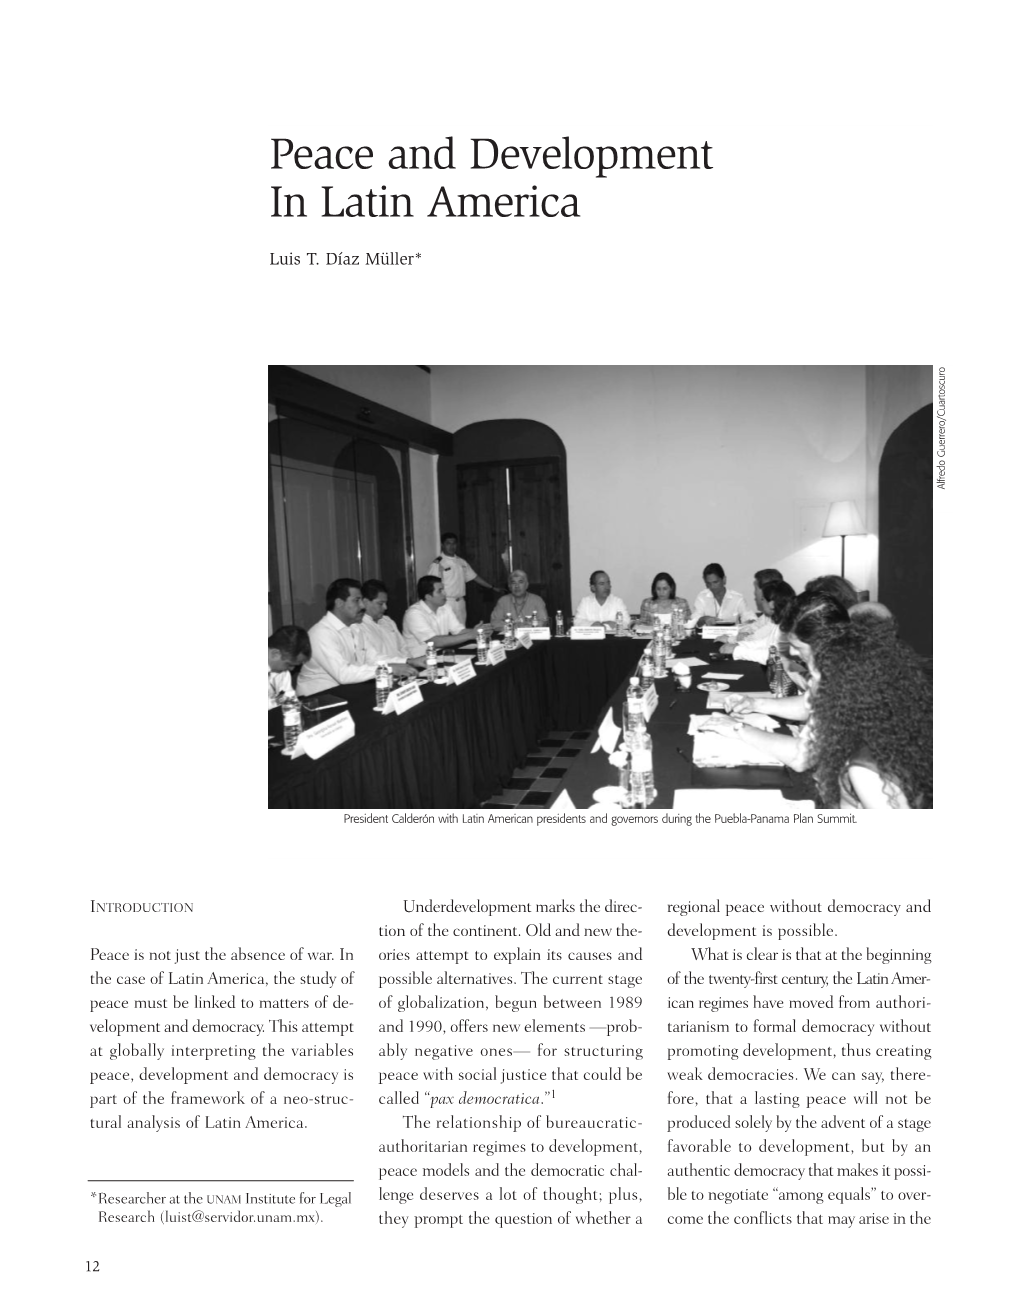 Peace and Development in Latin America